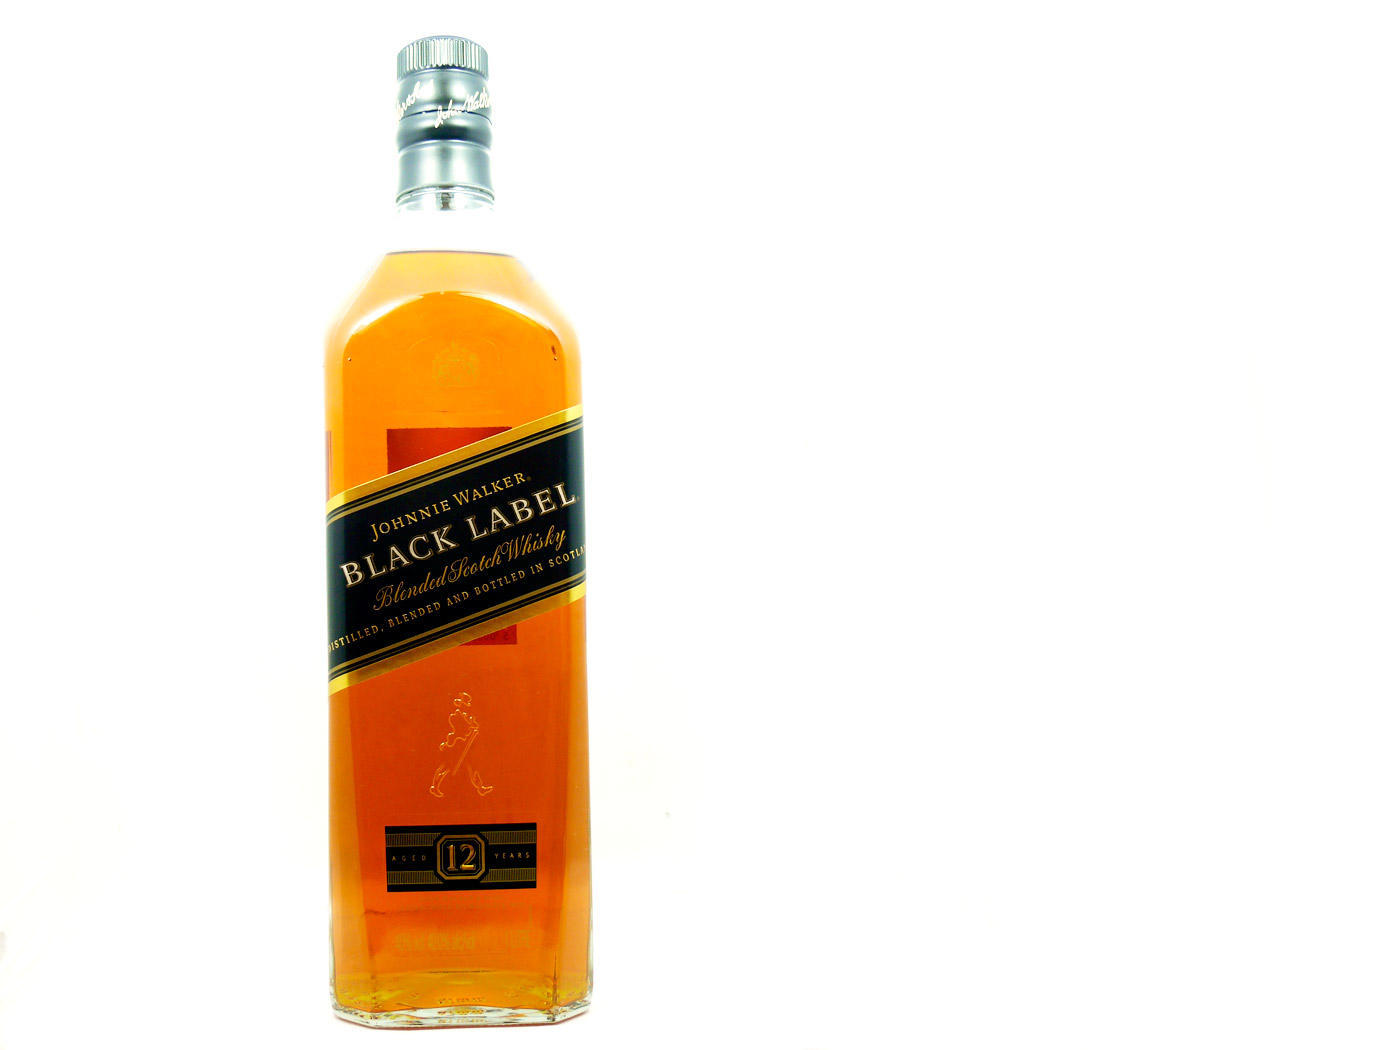 Johnnie Walker Black Label Whisky - 12 years old, copyright Picturejockey : Navin Harish 2005-2014